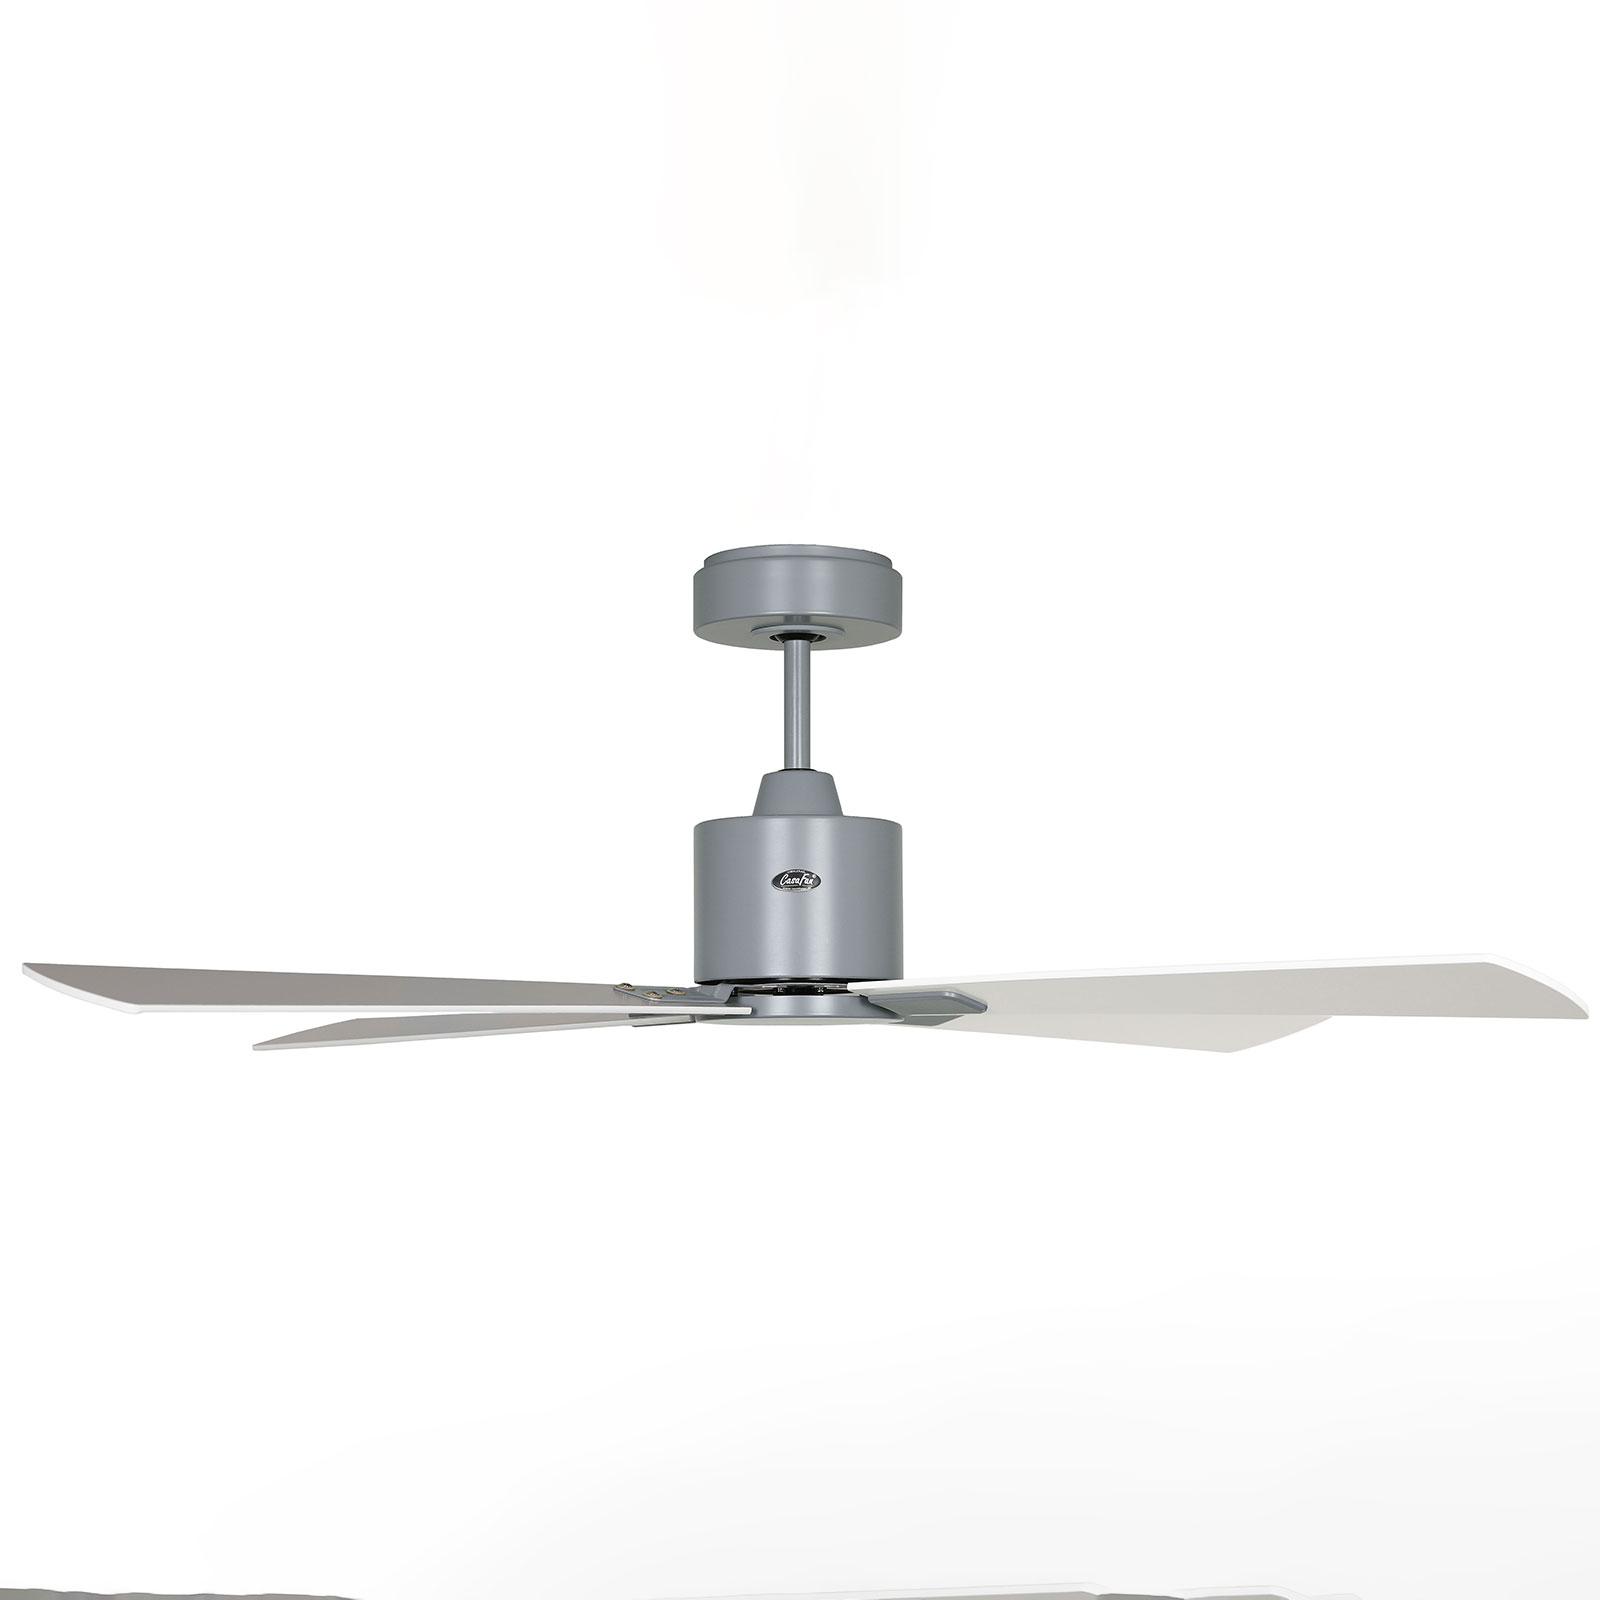 Eco Concept ceiling fan 152 cm grey/white-grey